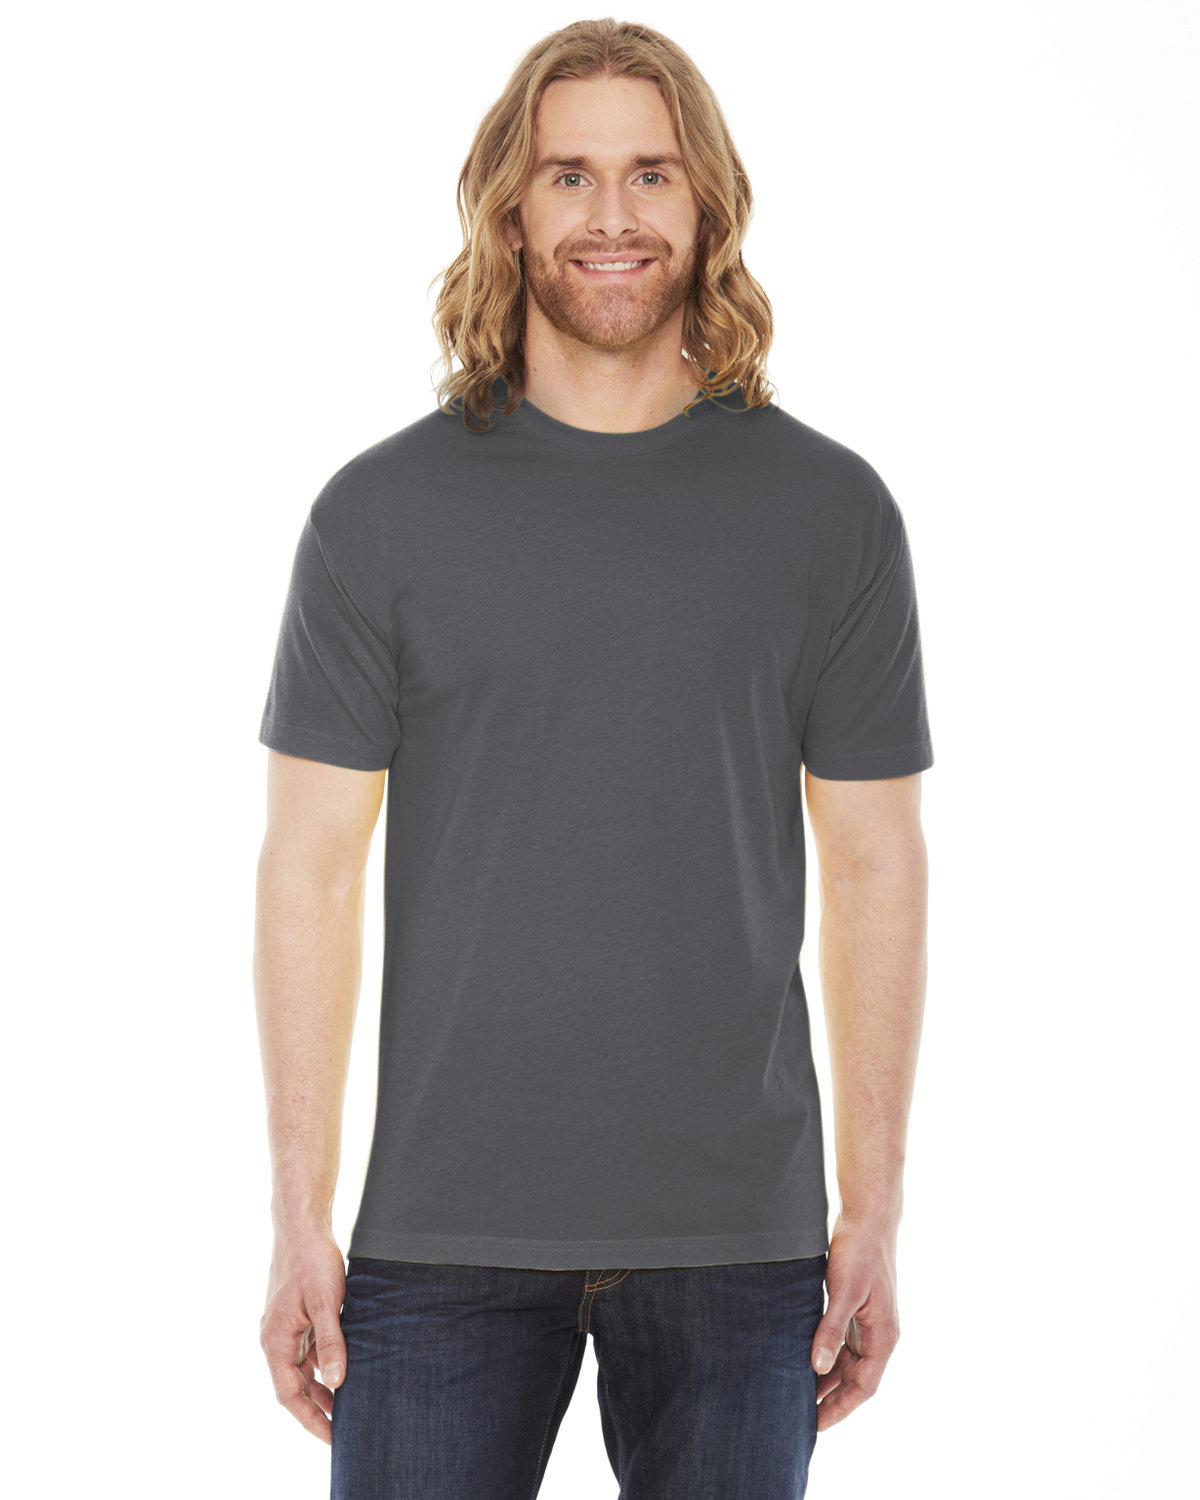 American Apparel Unisex Classic T-Shirt ASPHALT 